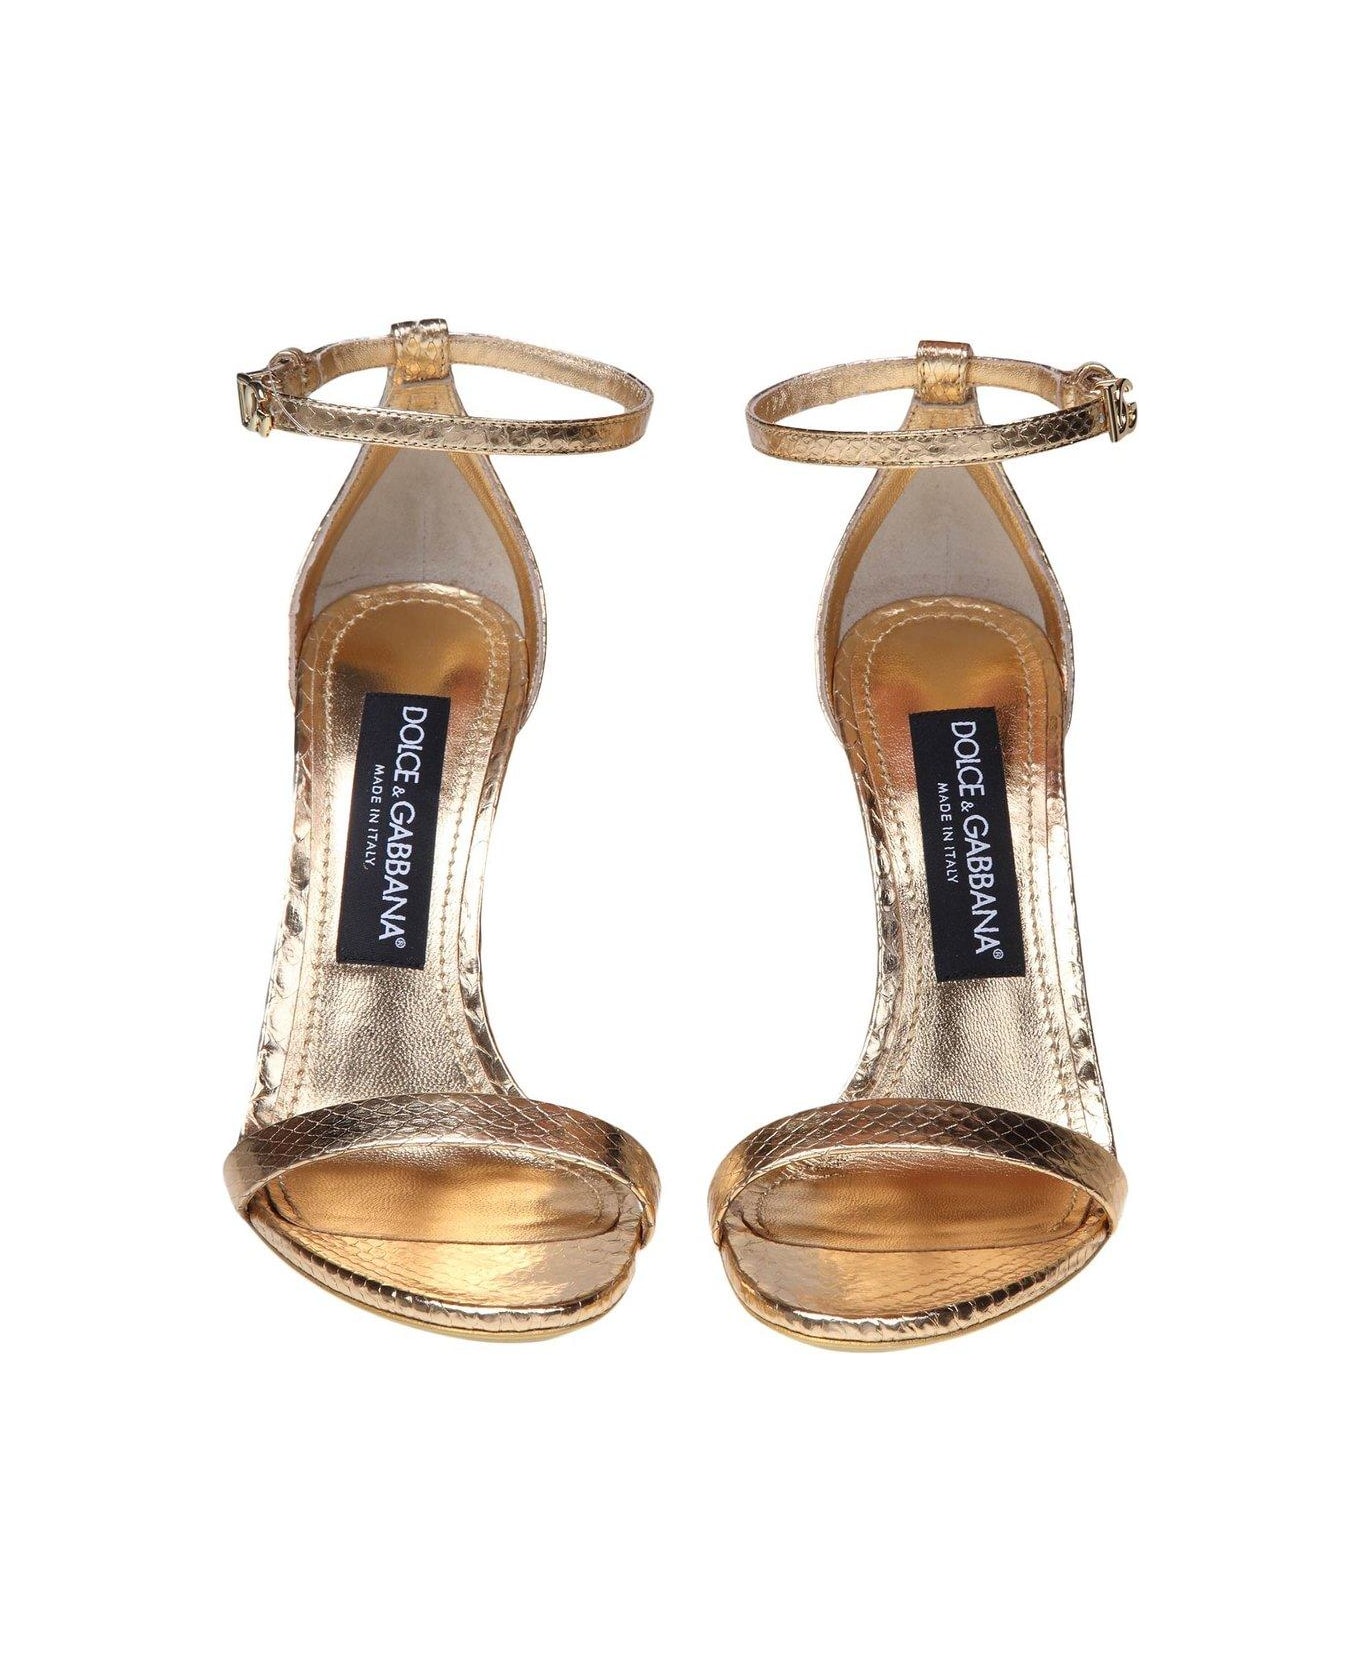 Dolce & Gabbana Keira High Stiletto Heel Sandals - Gold サンダル